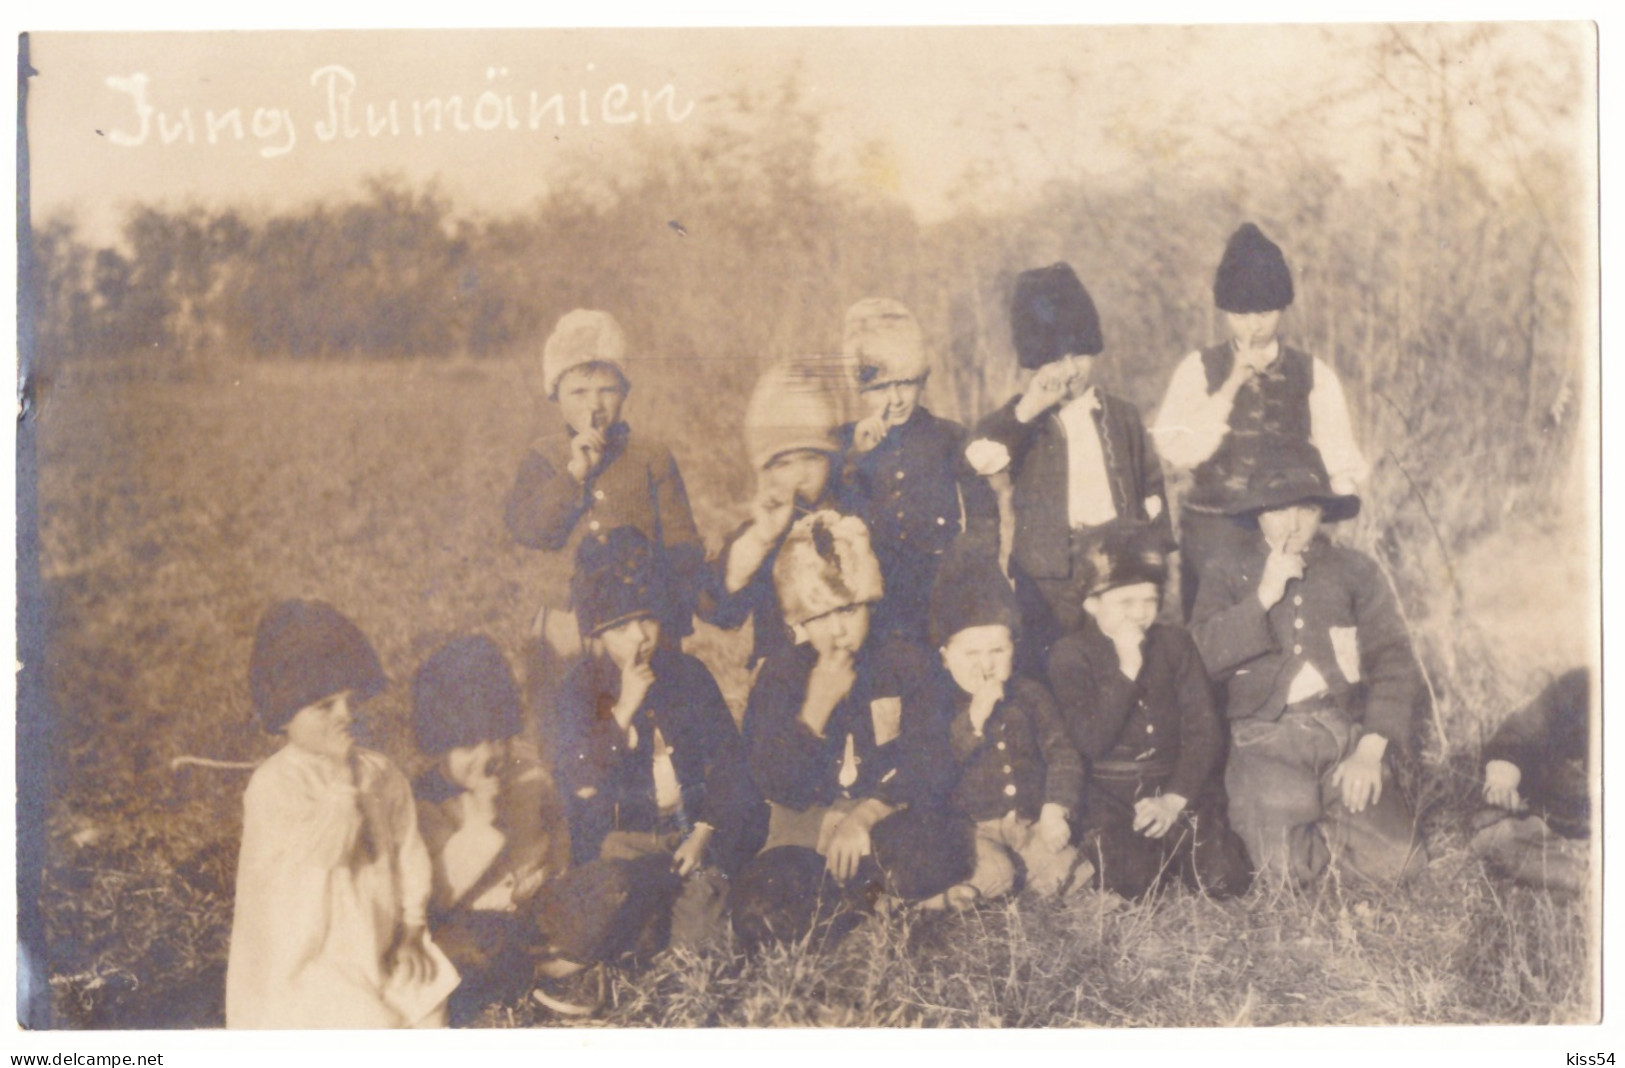 RO 38 - 21135 ETHNIC, Children, Romania - Old Postcard, Real Photo - Unused - Romania